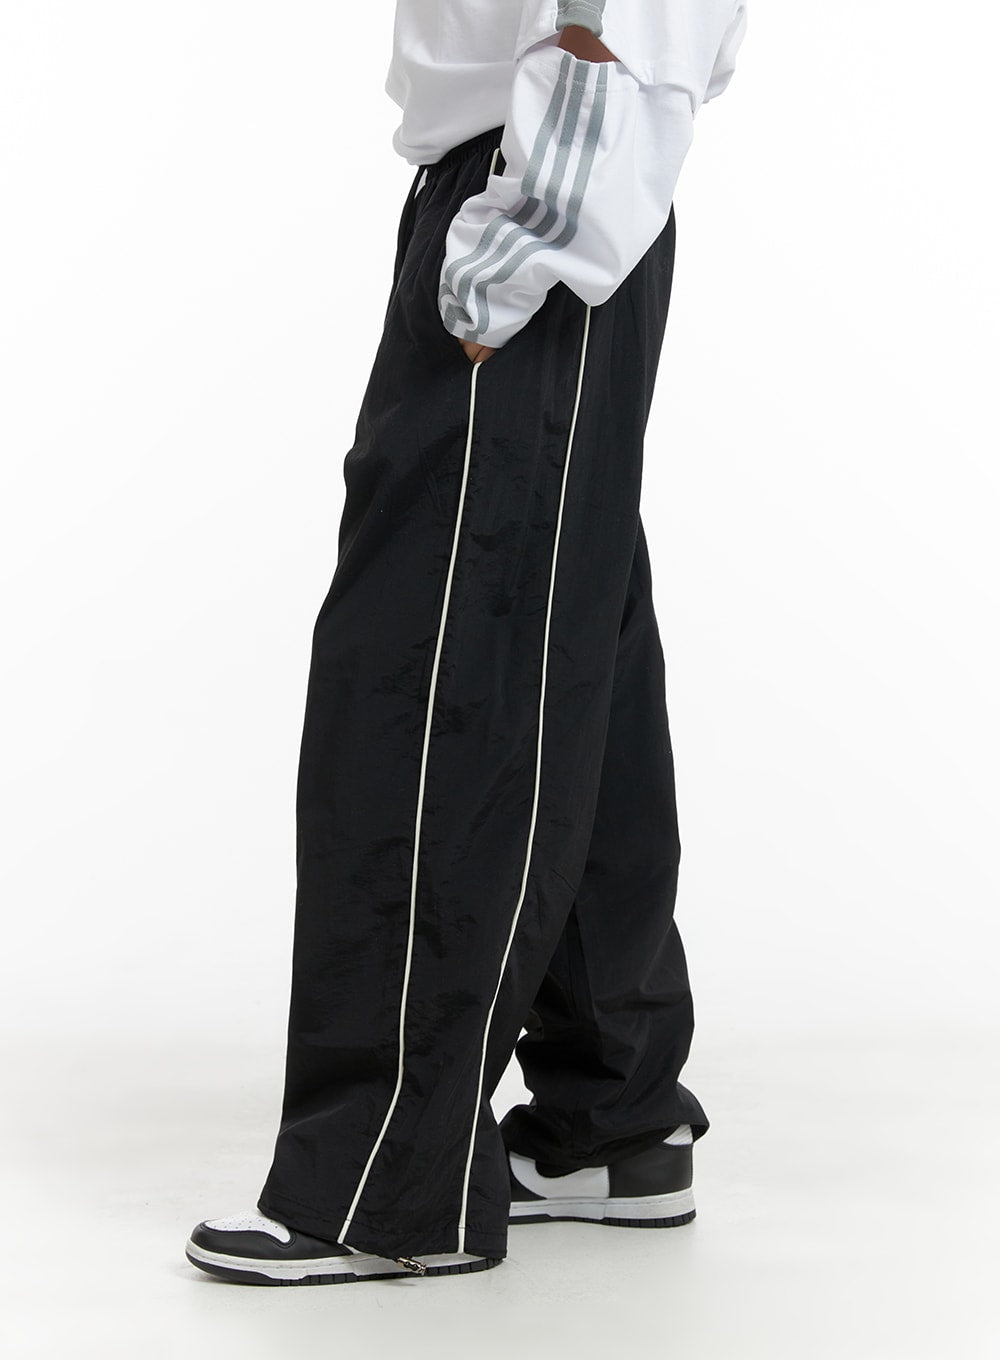 elastic-waist-contrasting-trim-sweatpants-cm407